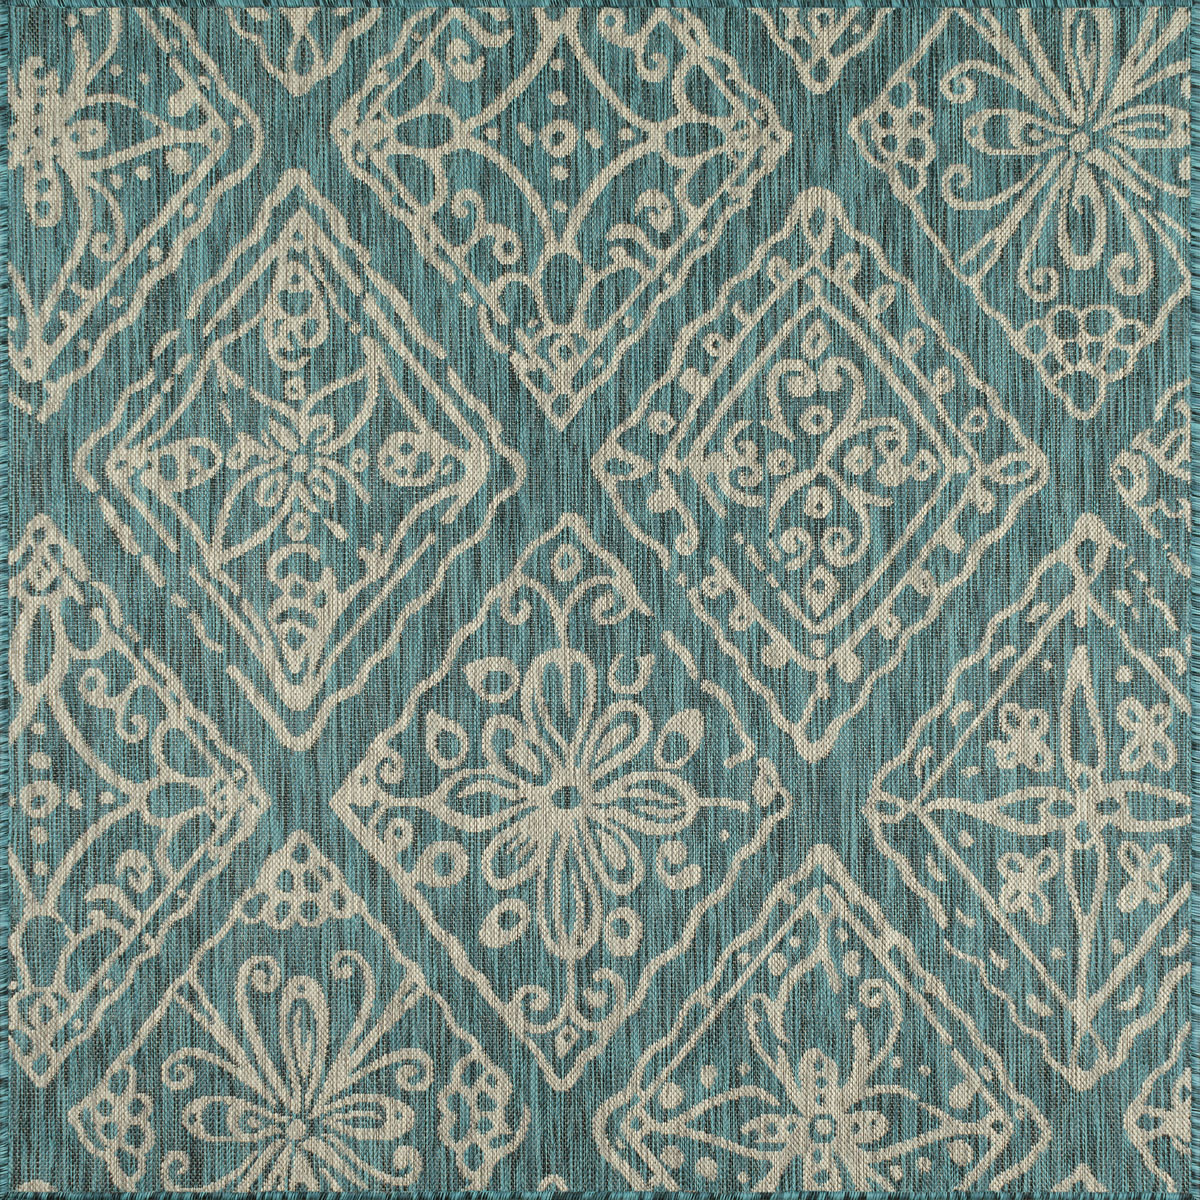 Tapis avec ornement floral turquoise - 200x200